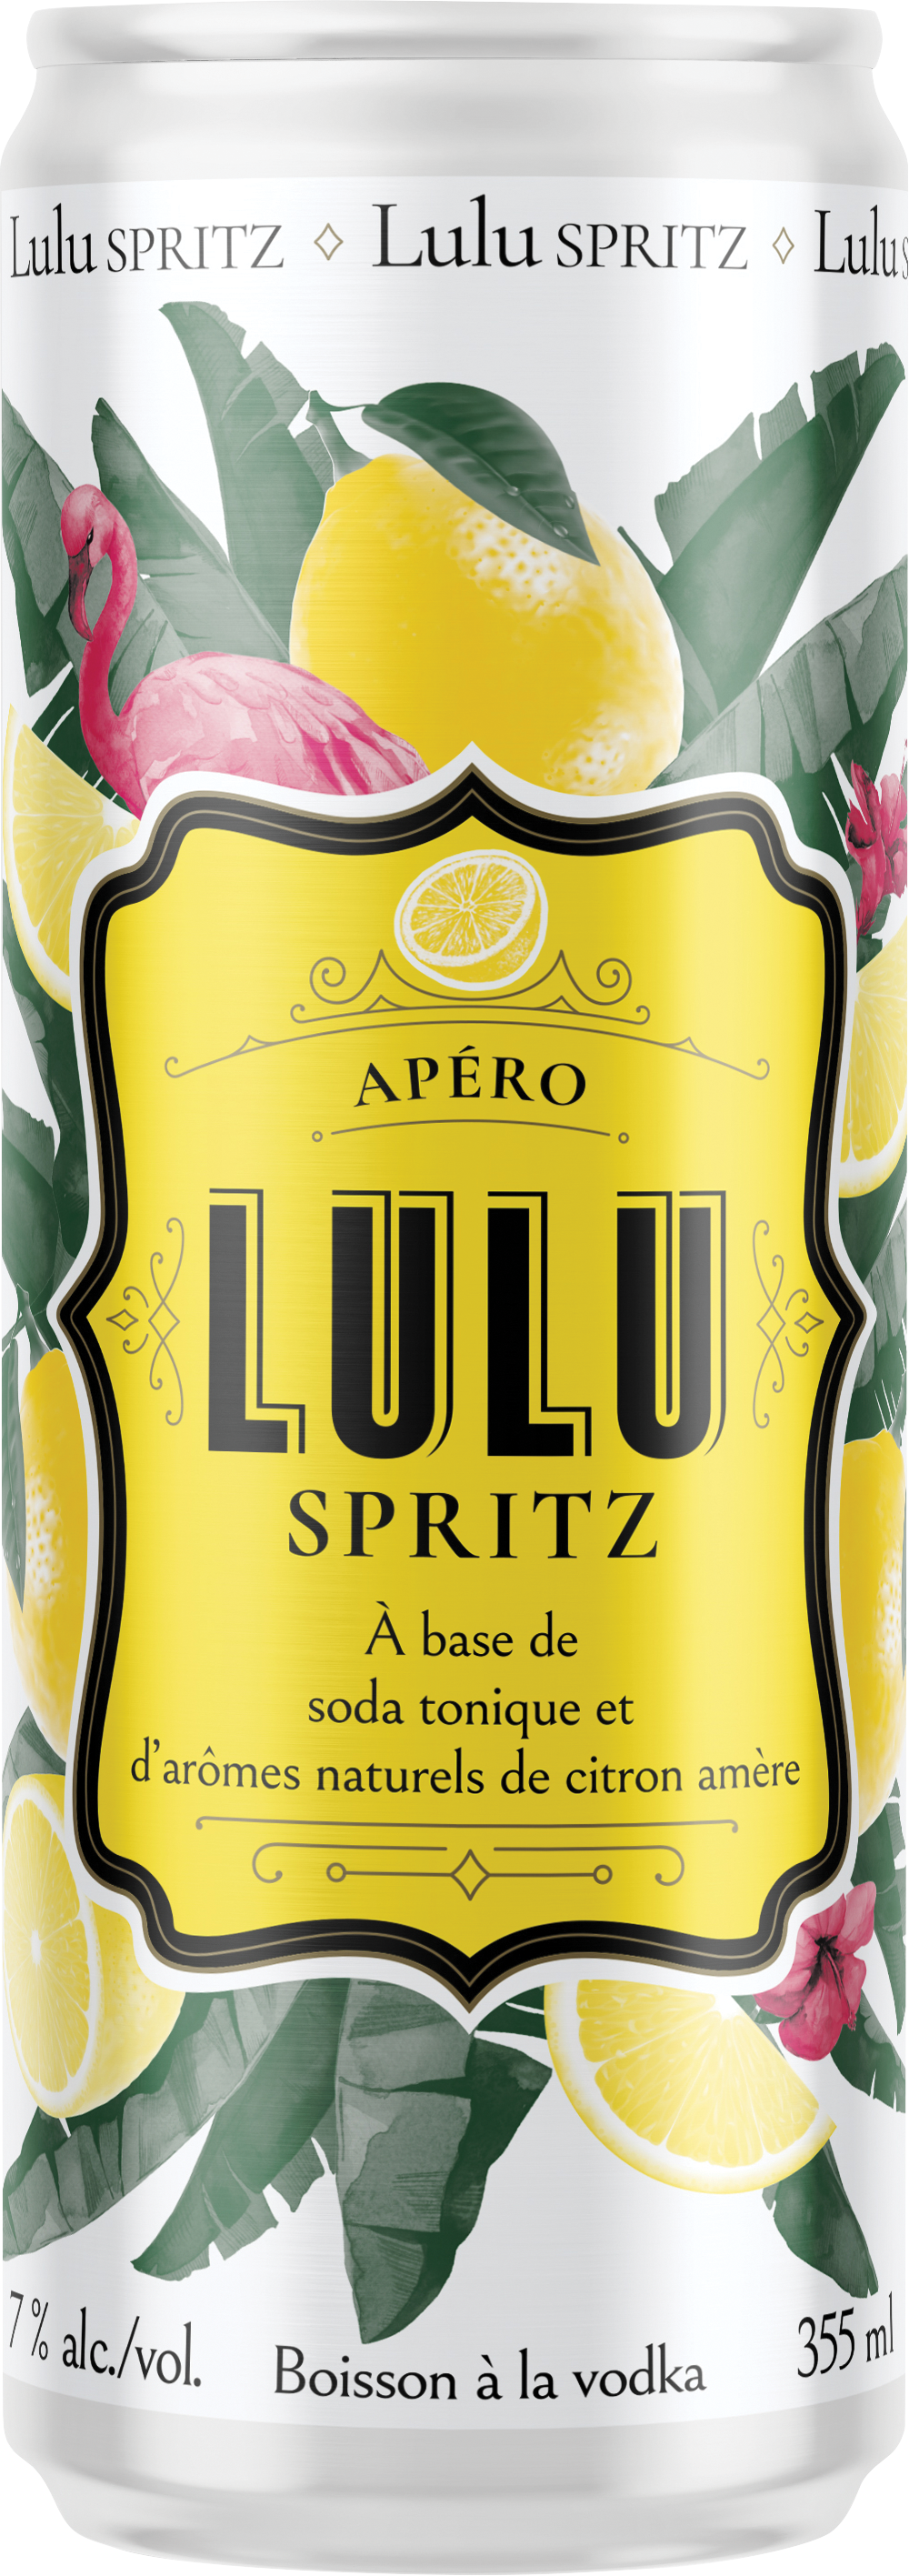 Lulu Spritz Citron amer